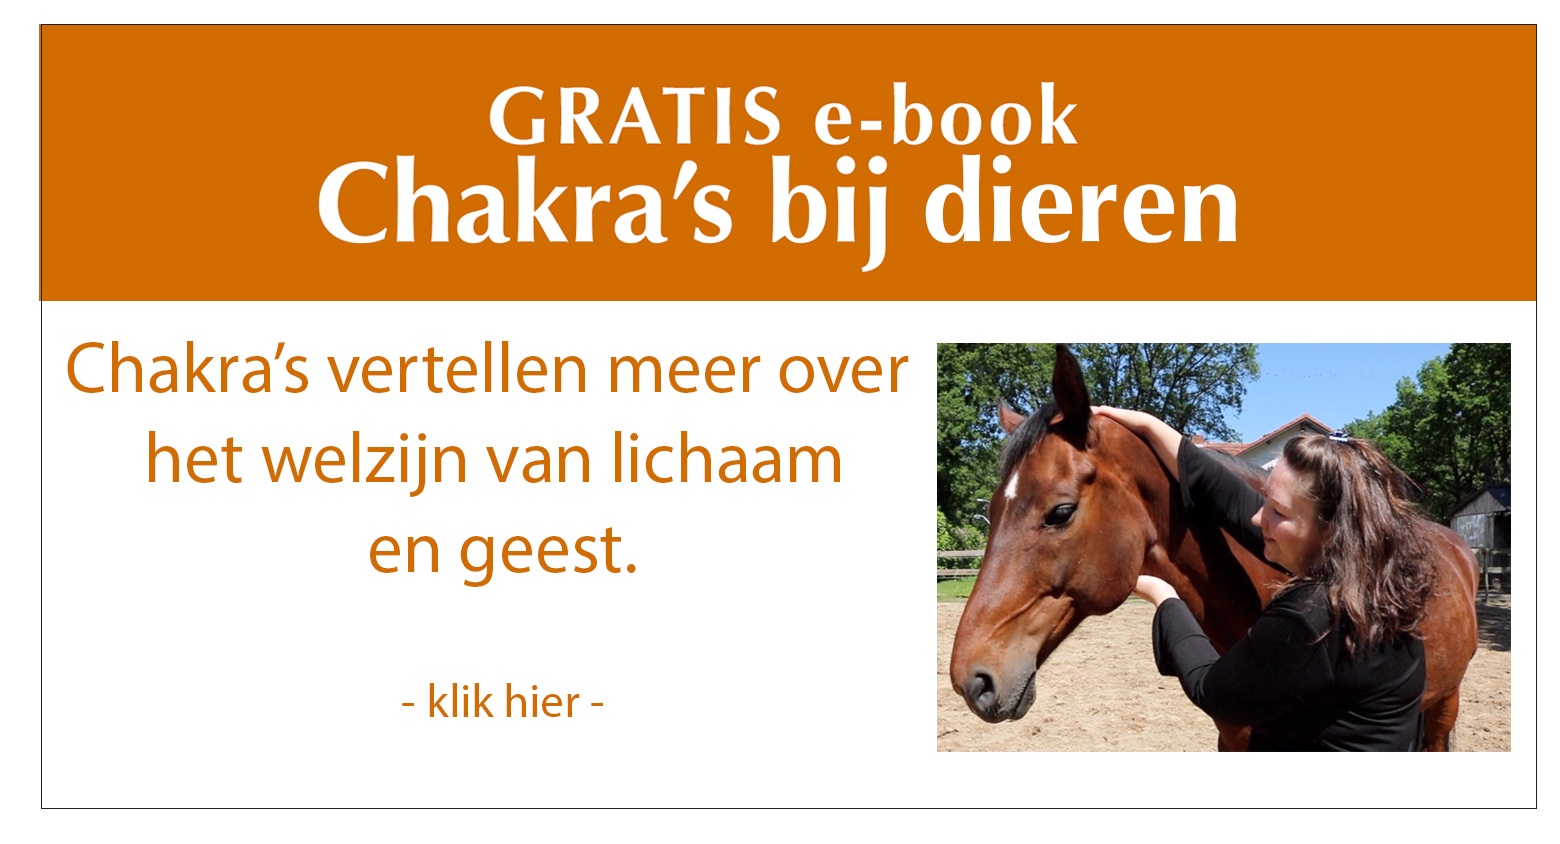 e-book chakra's bij dieren